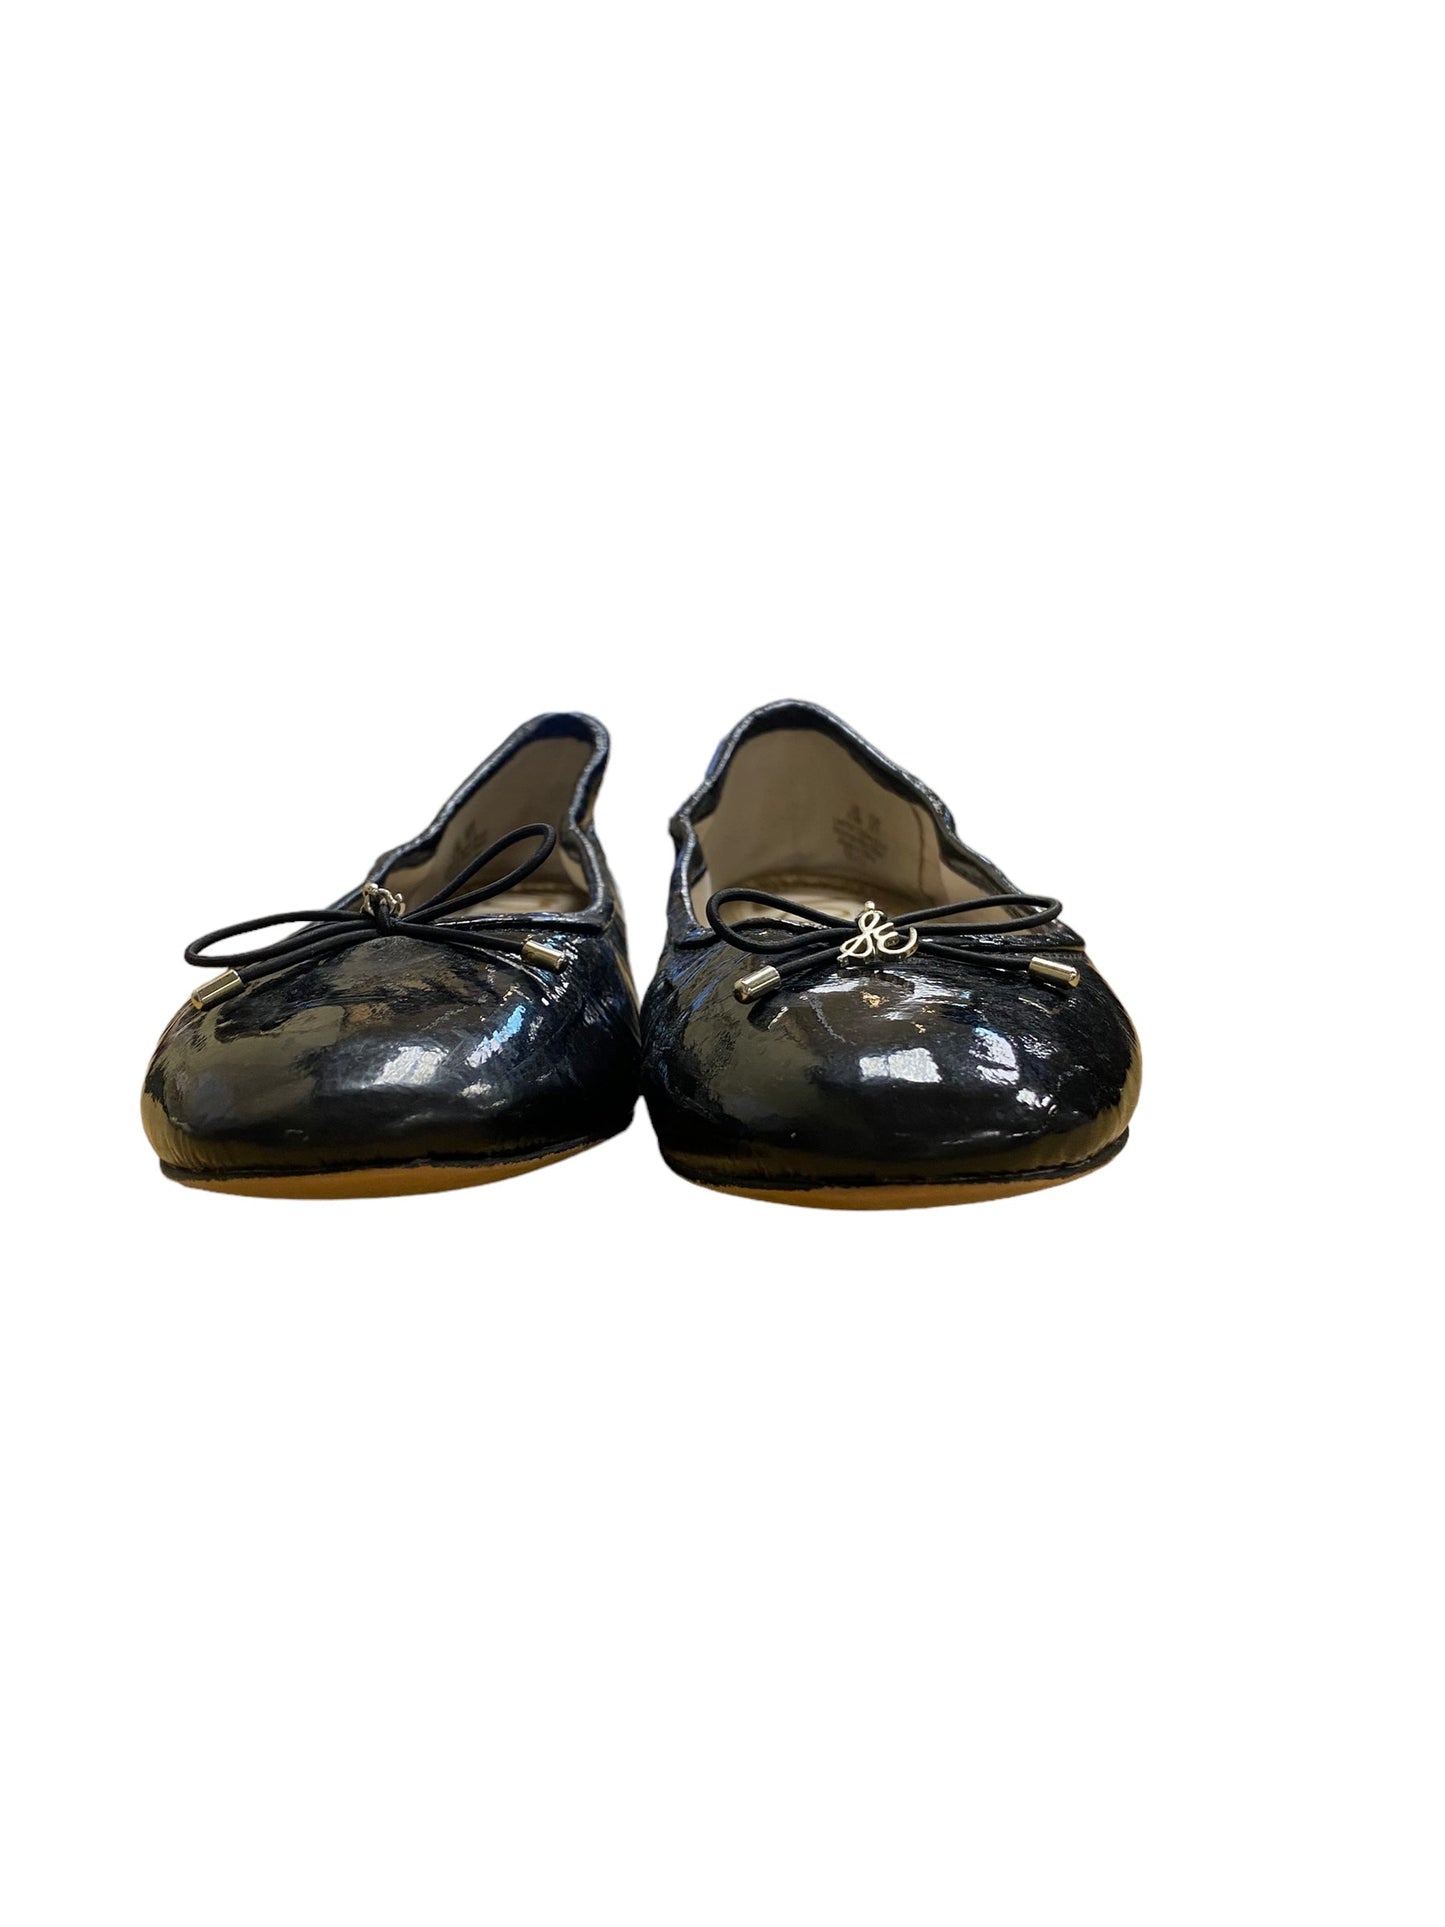 Shoes Flats Ballet By Sam Edelman  Size: 6.5